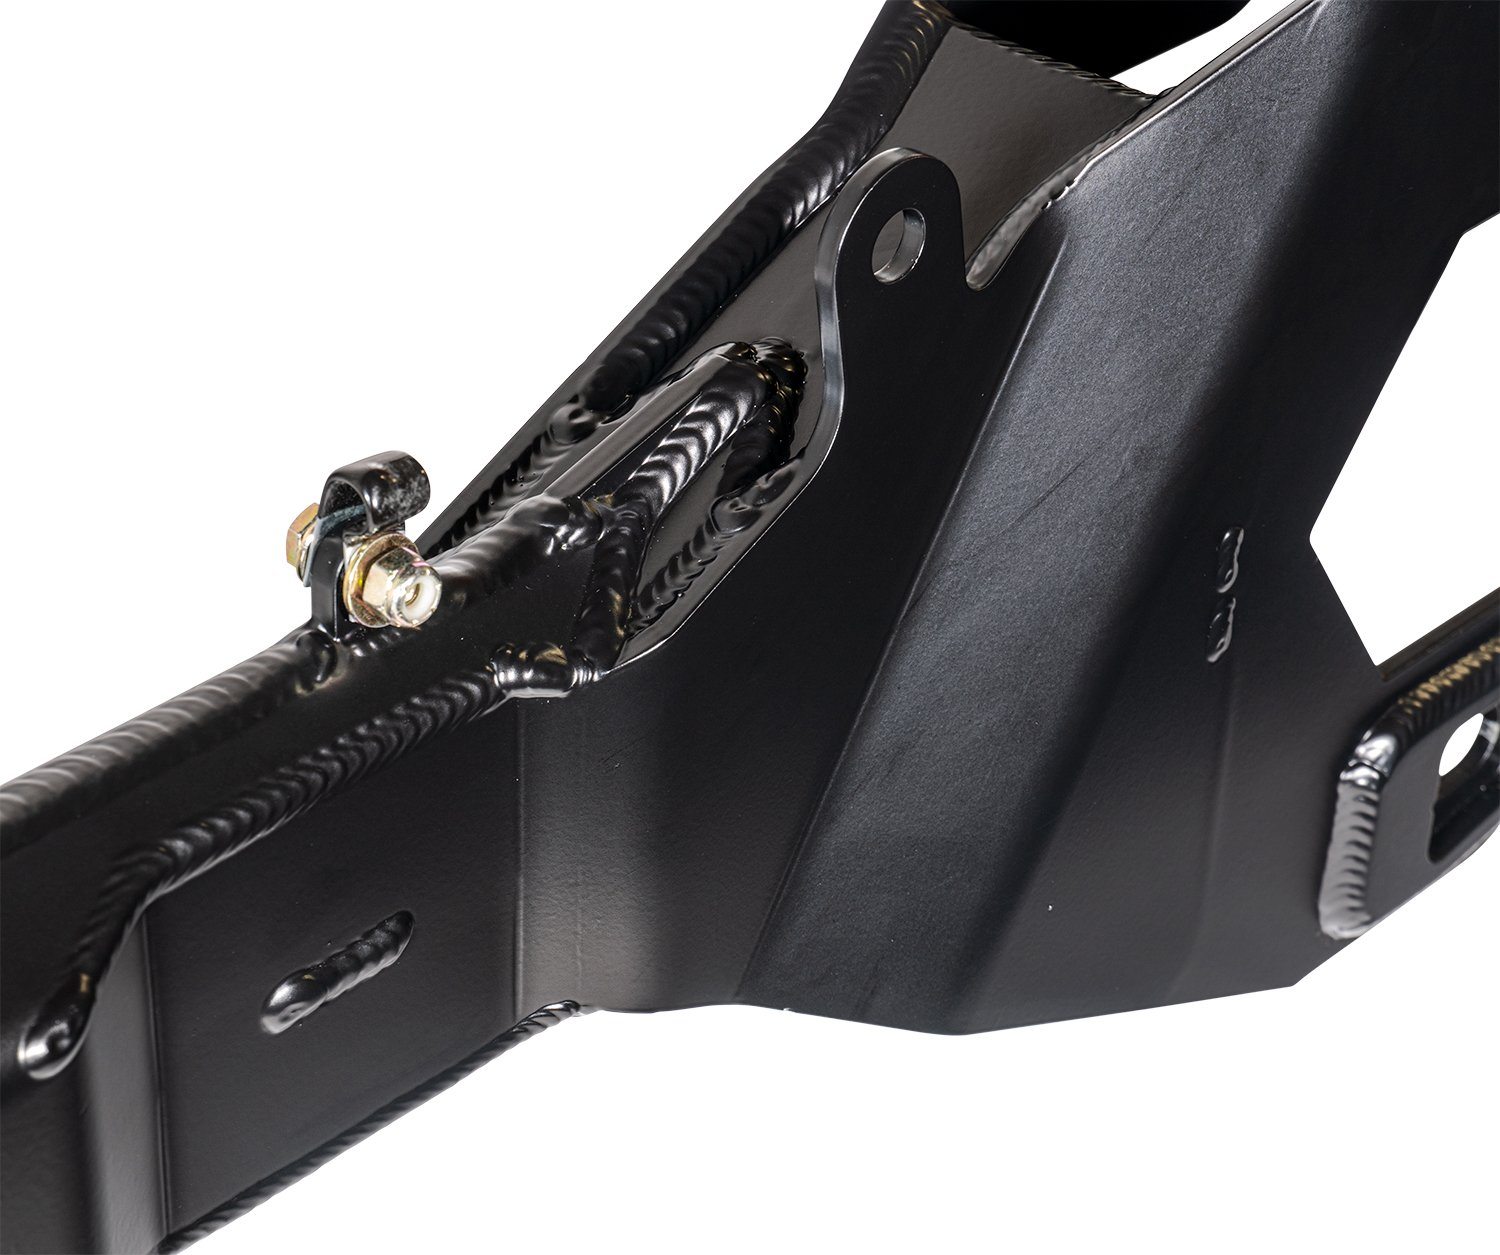 '05-22 Ford F250/350 Fabricated Radius Arms Suspension Carli Suspension close-up